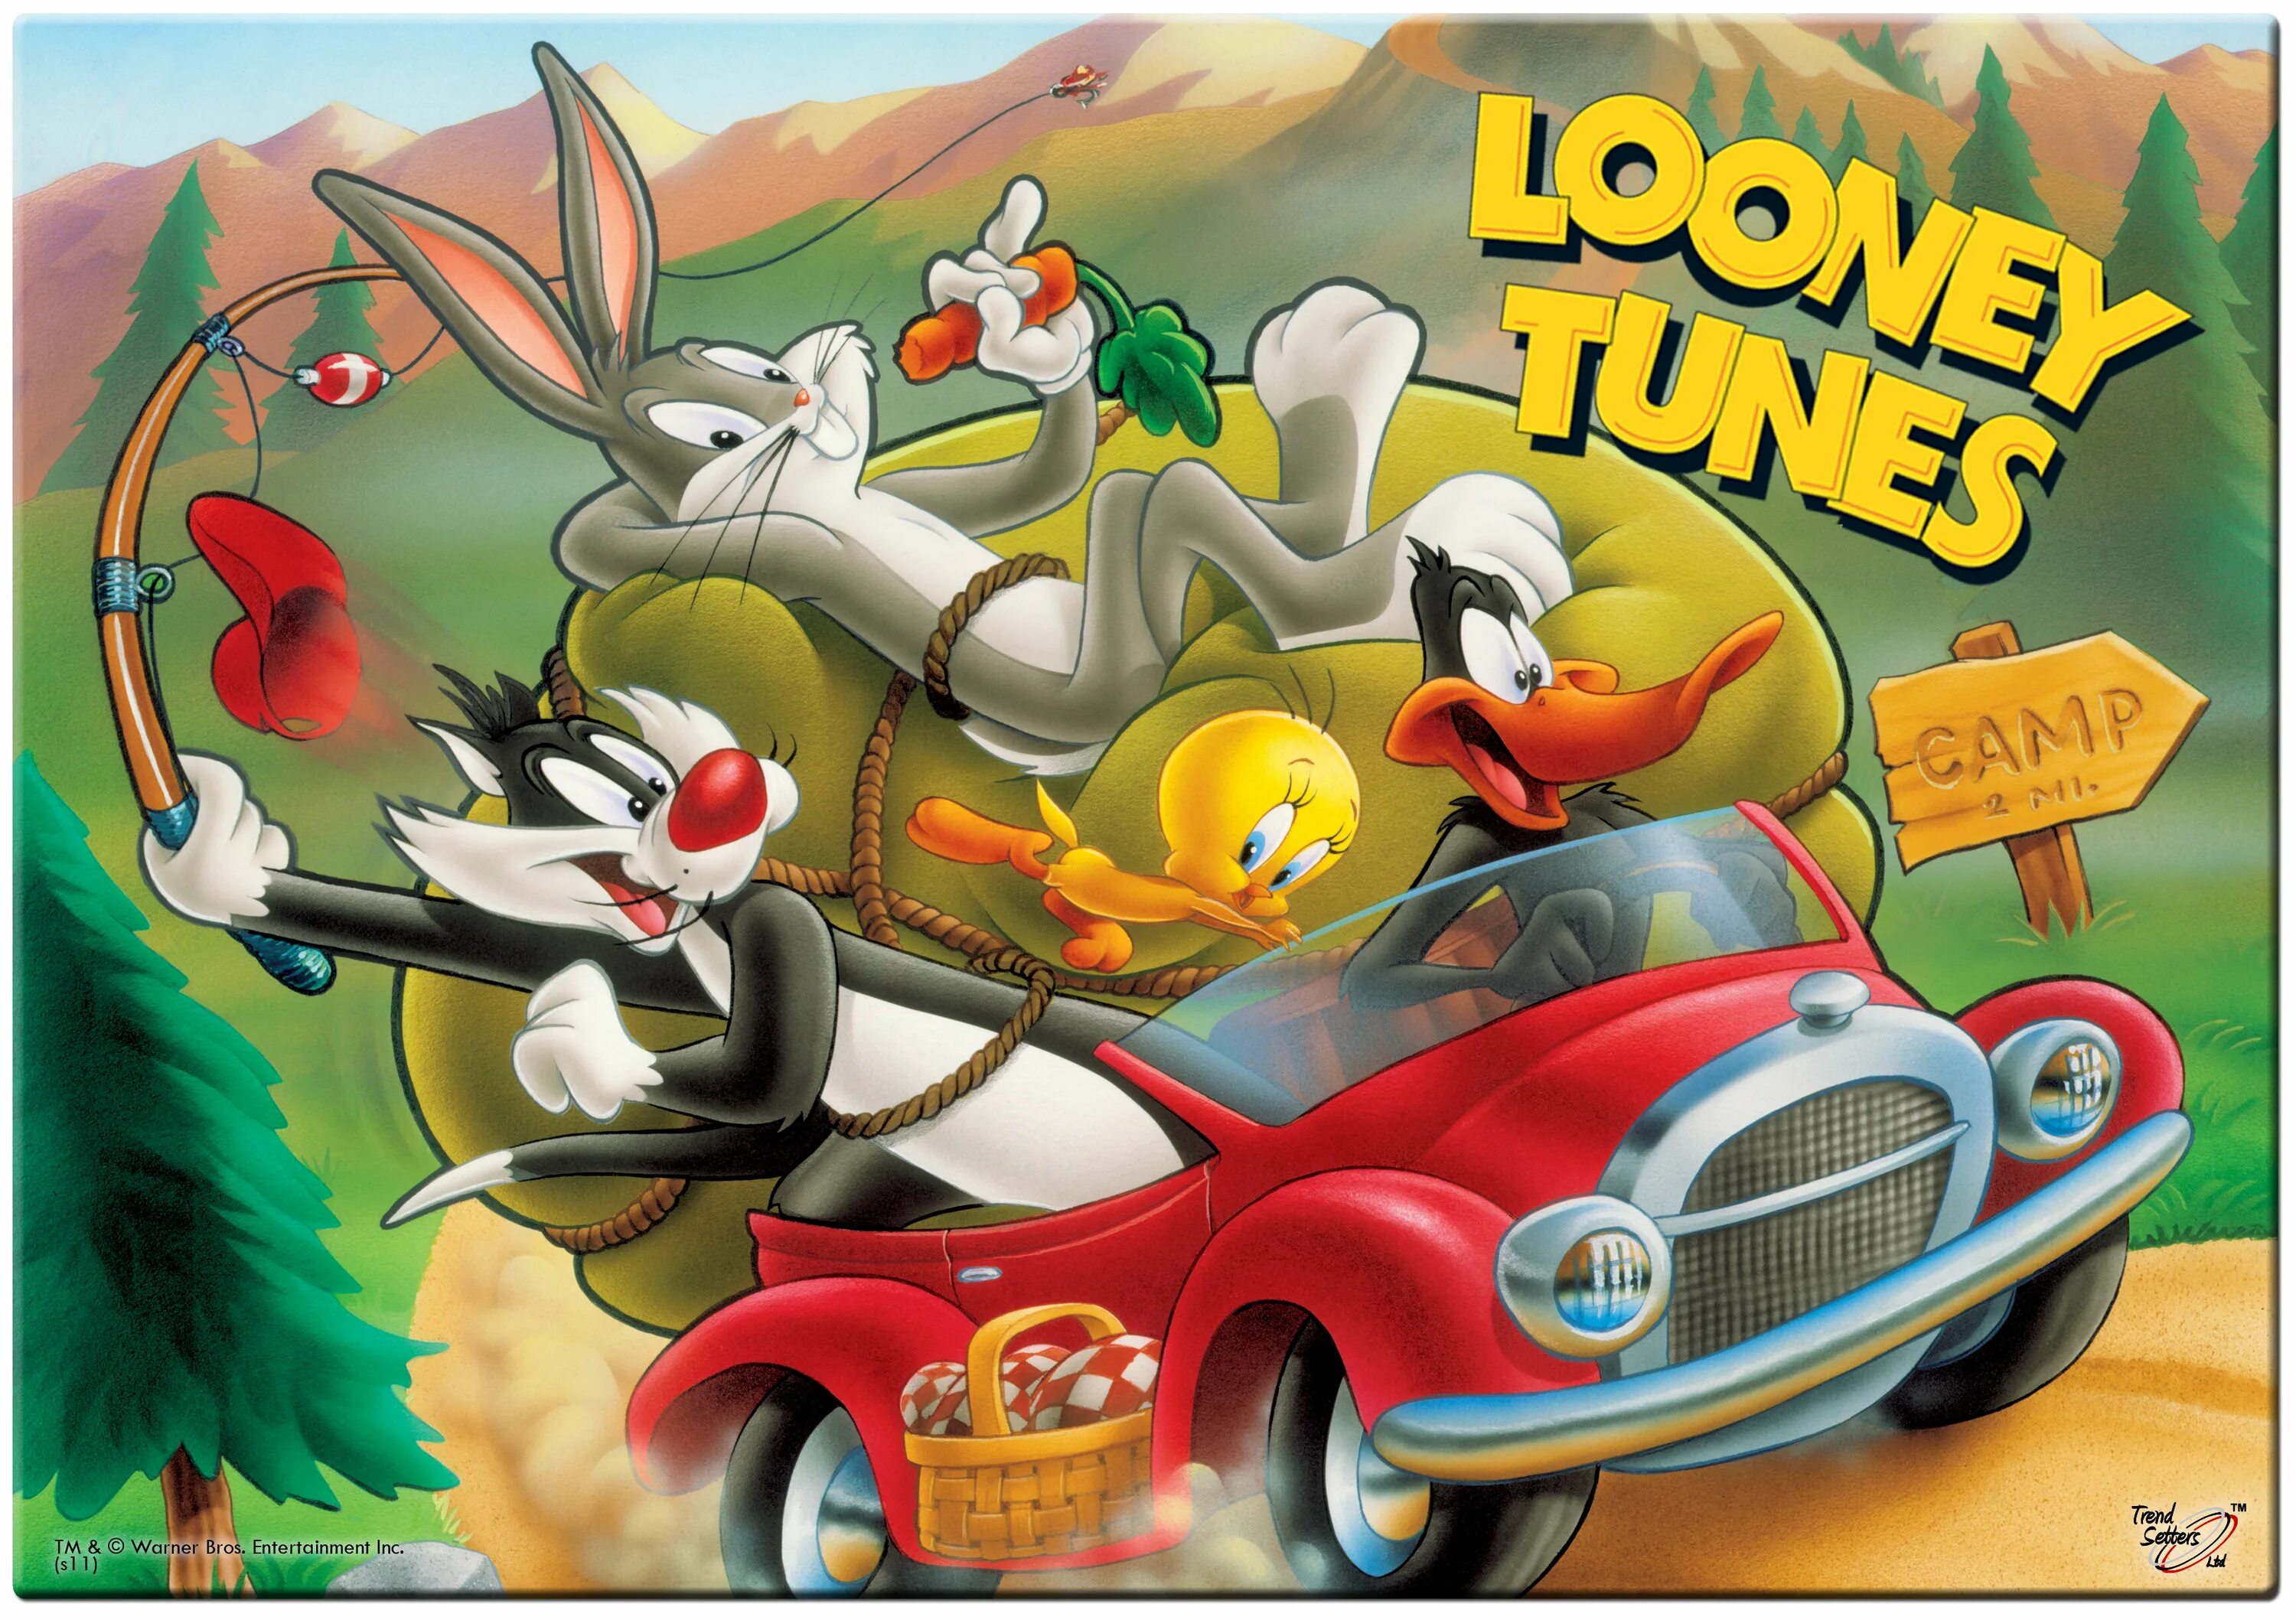 Looney tunes андроид. Looney Tunes Постер. Багз Банни Постер. Персонажи мультфильмов Луни Тюнз. Постеры Looney Tunes 2021.